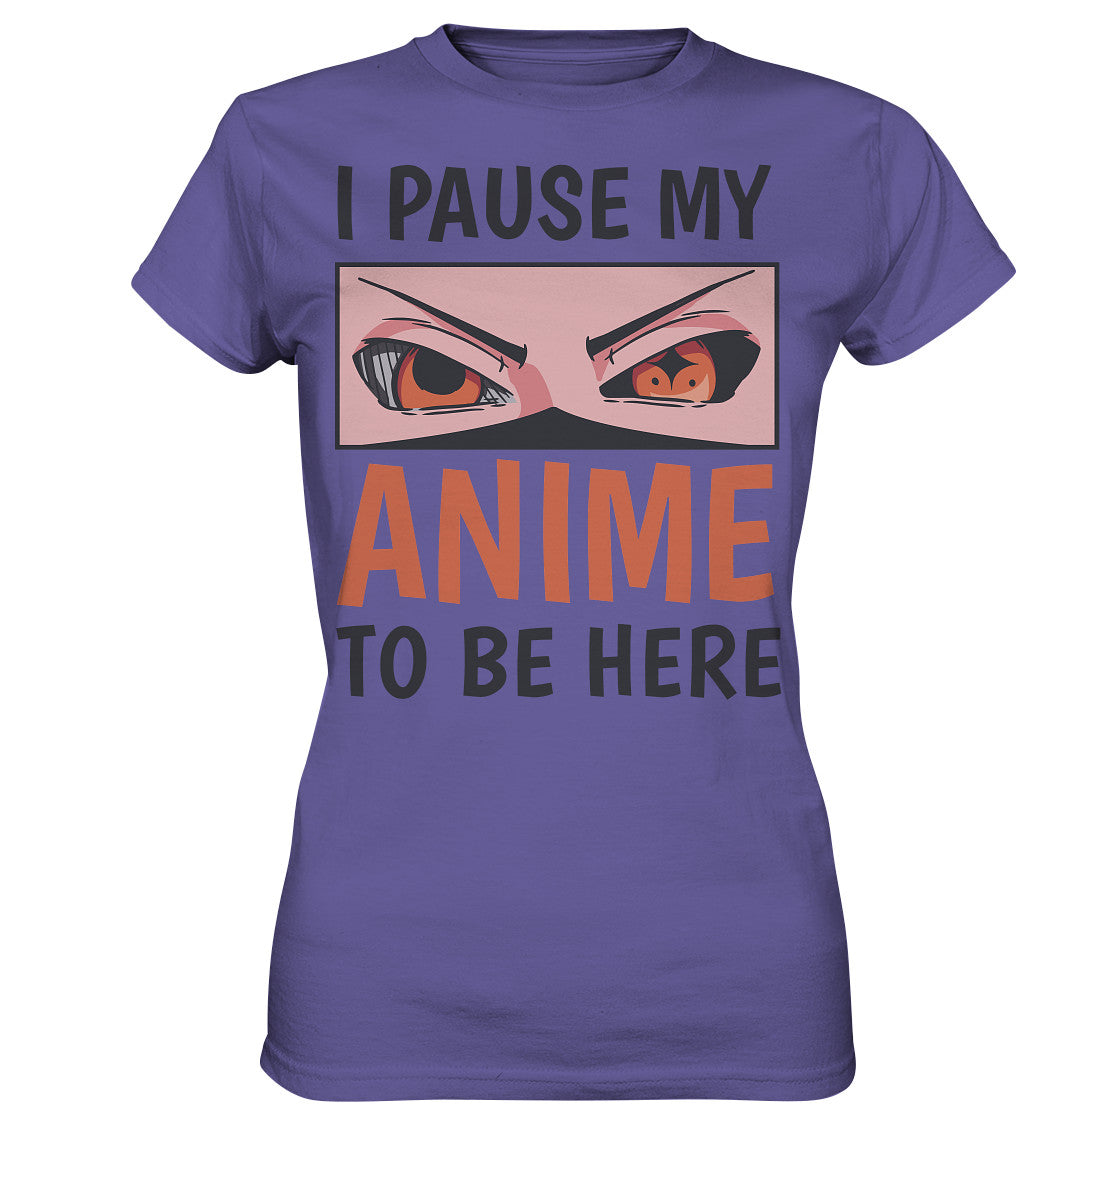 Pause my Anime - Damen Premium Shirt